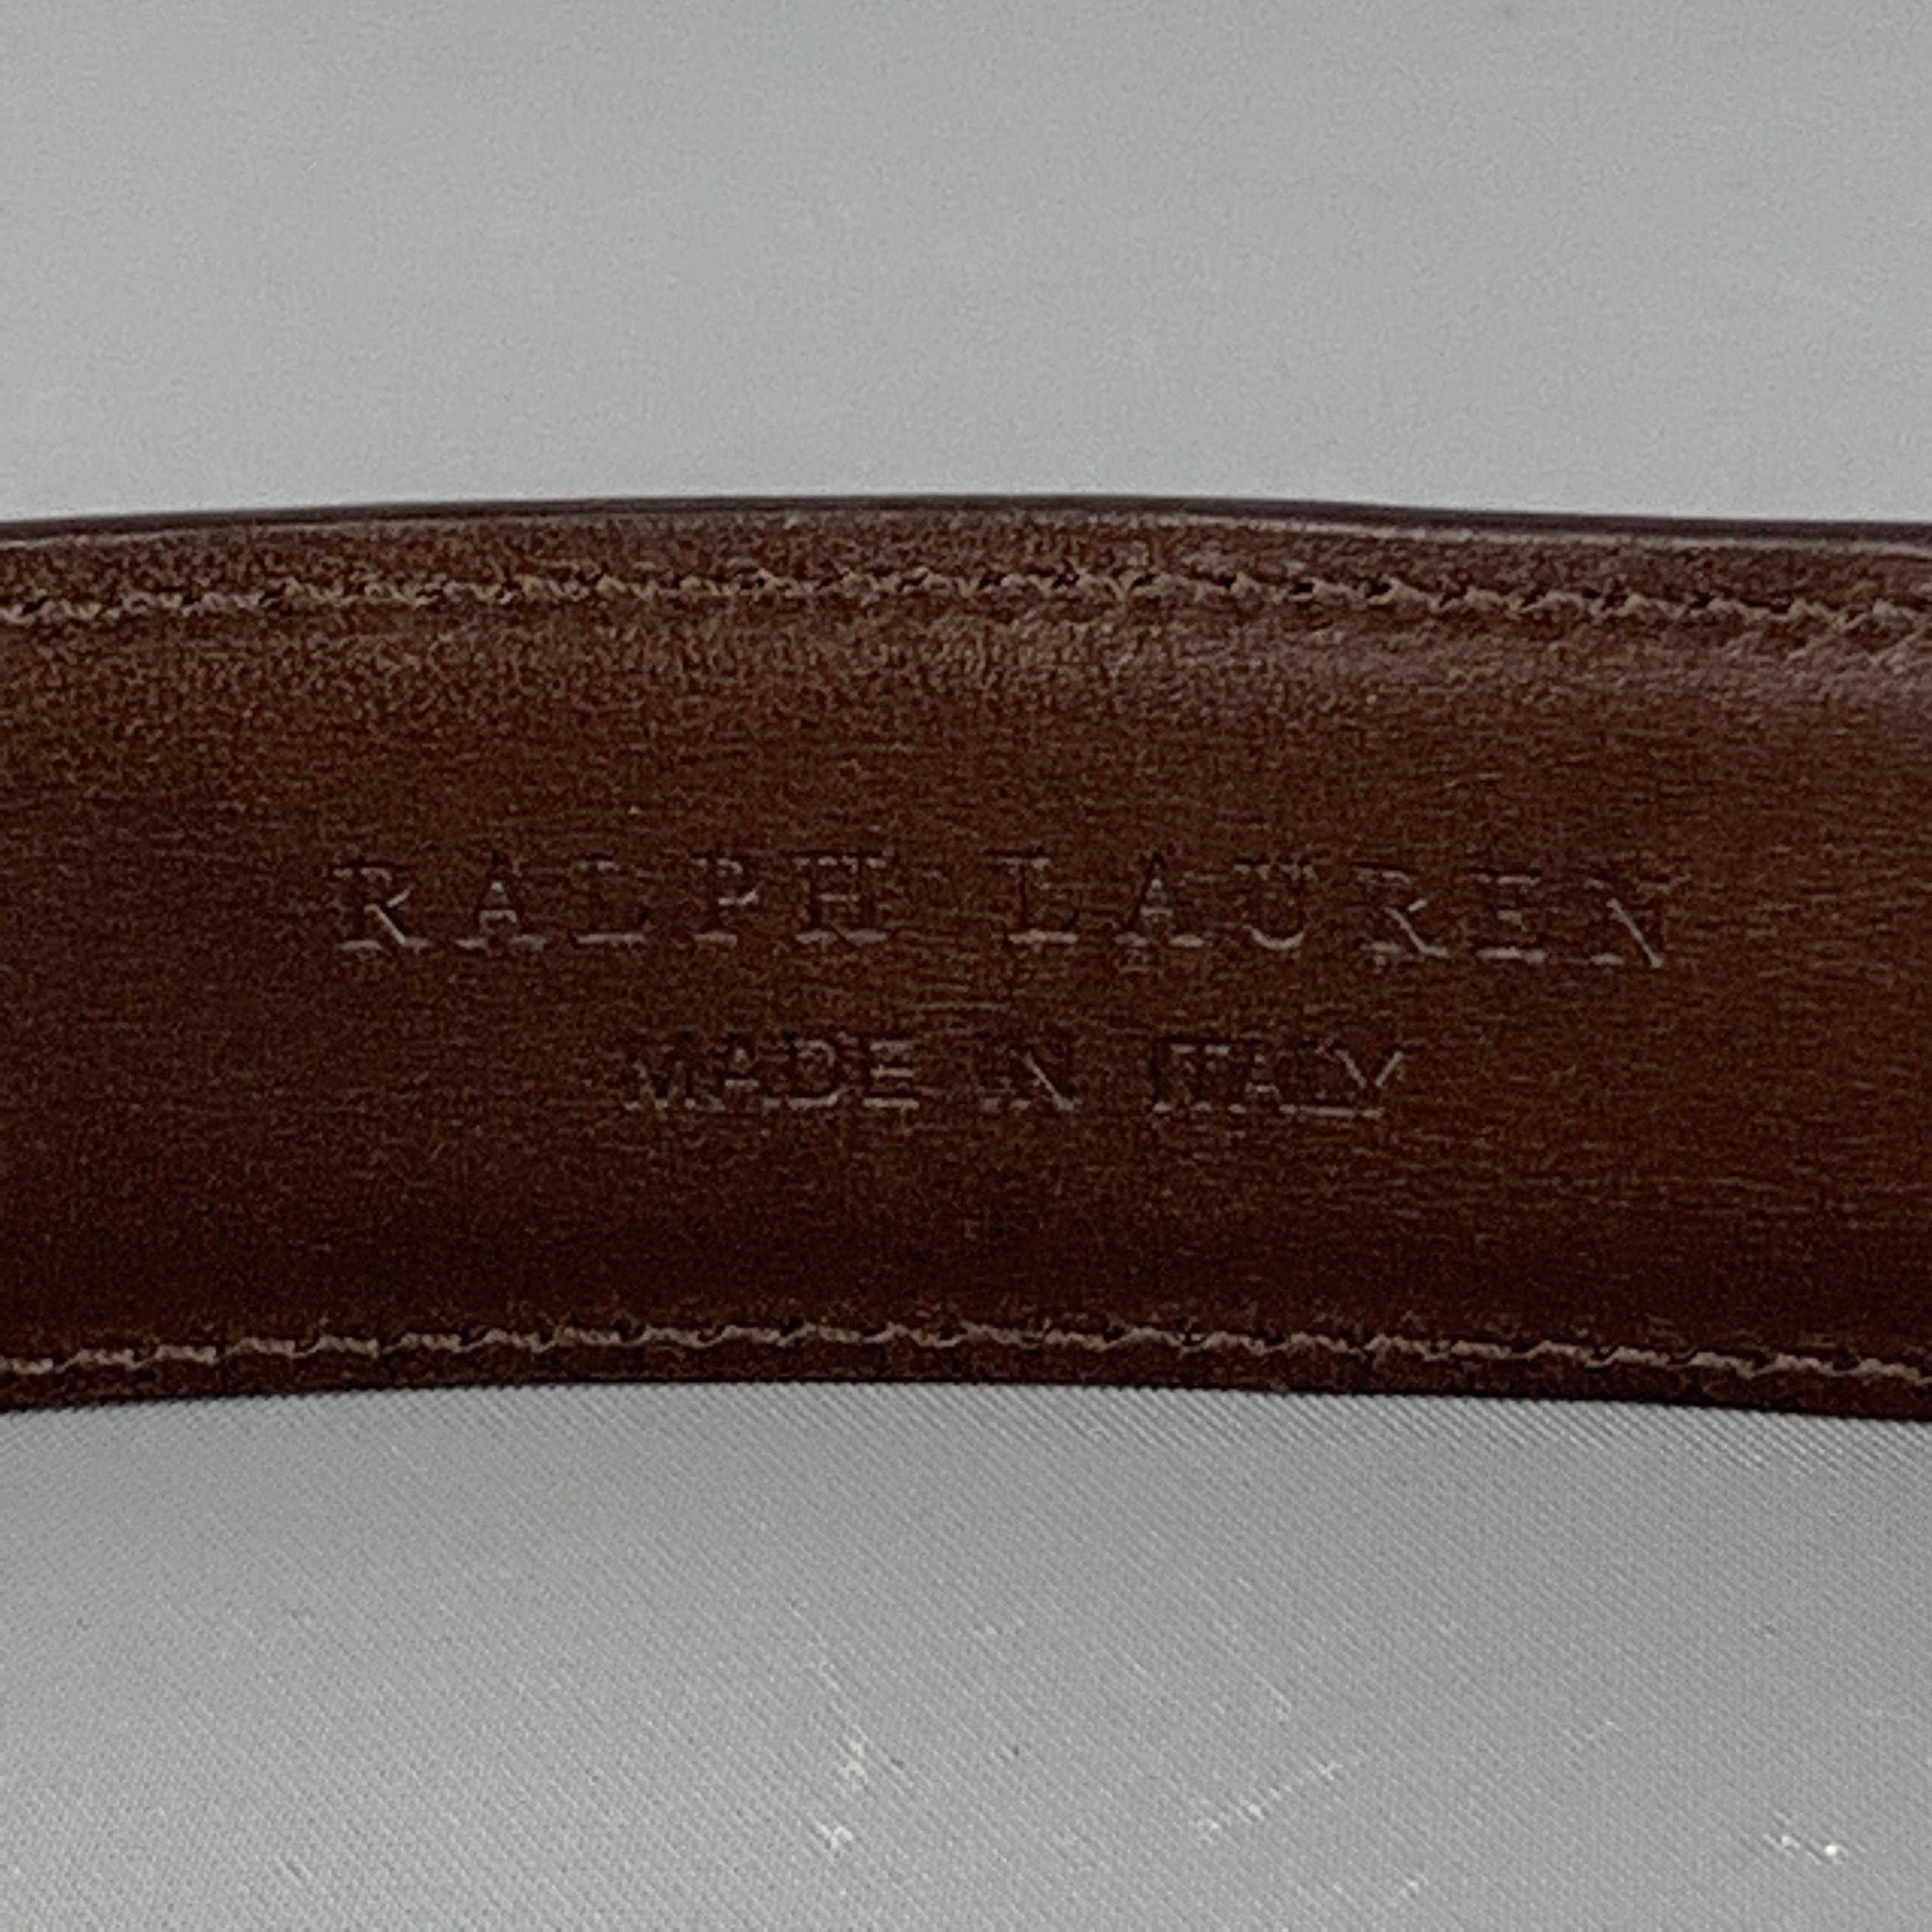 RALPH LAUREN Solid Size 32 Brown Leather Belt 4